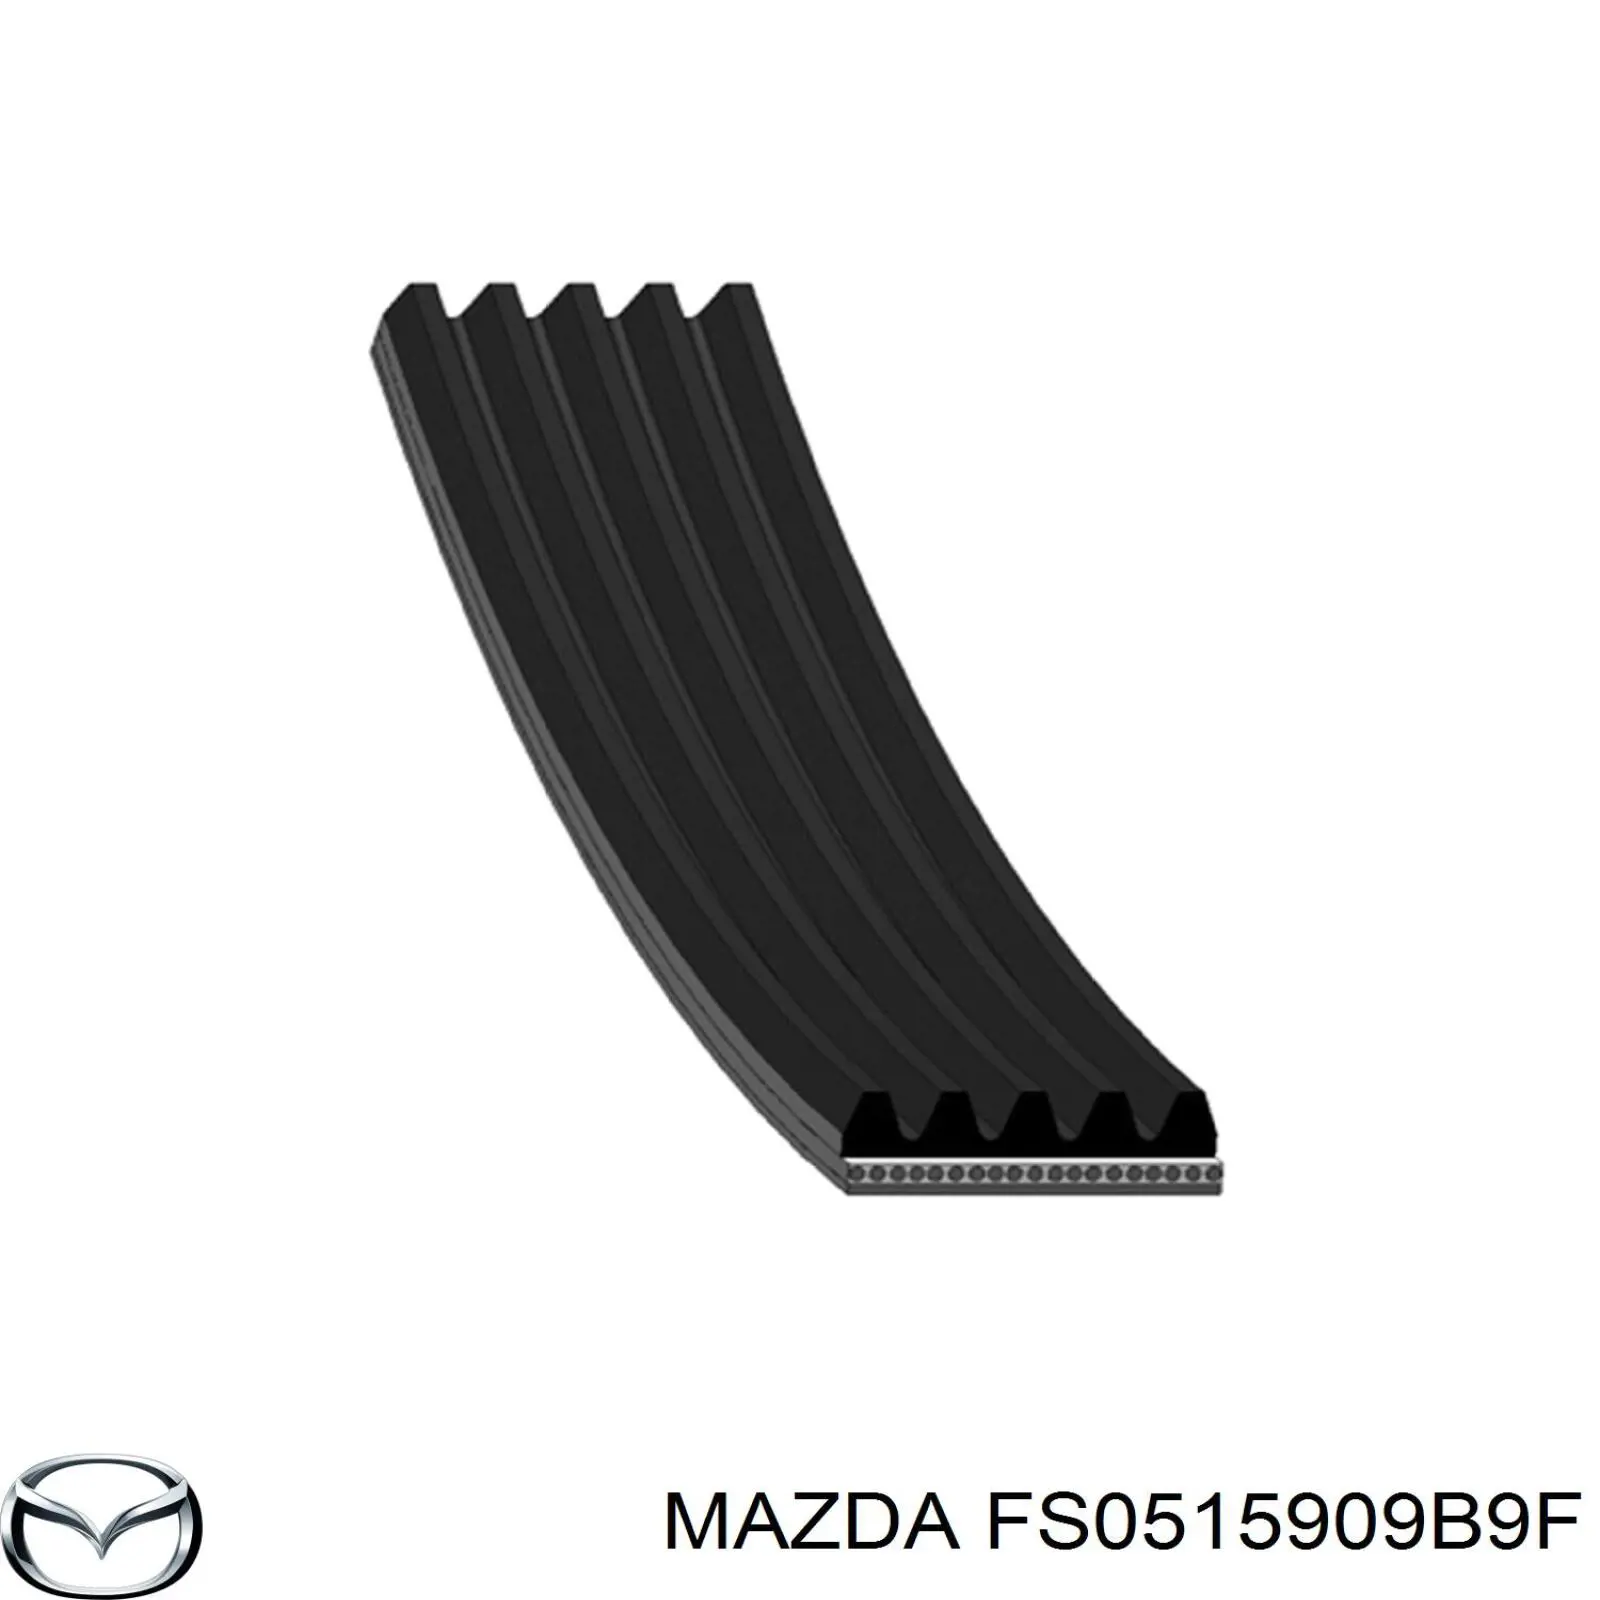 FS0515909B9F Mazda correa trapezoidal